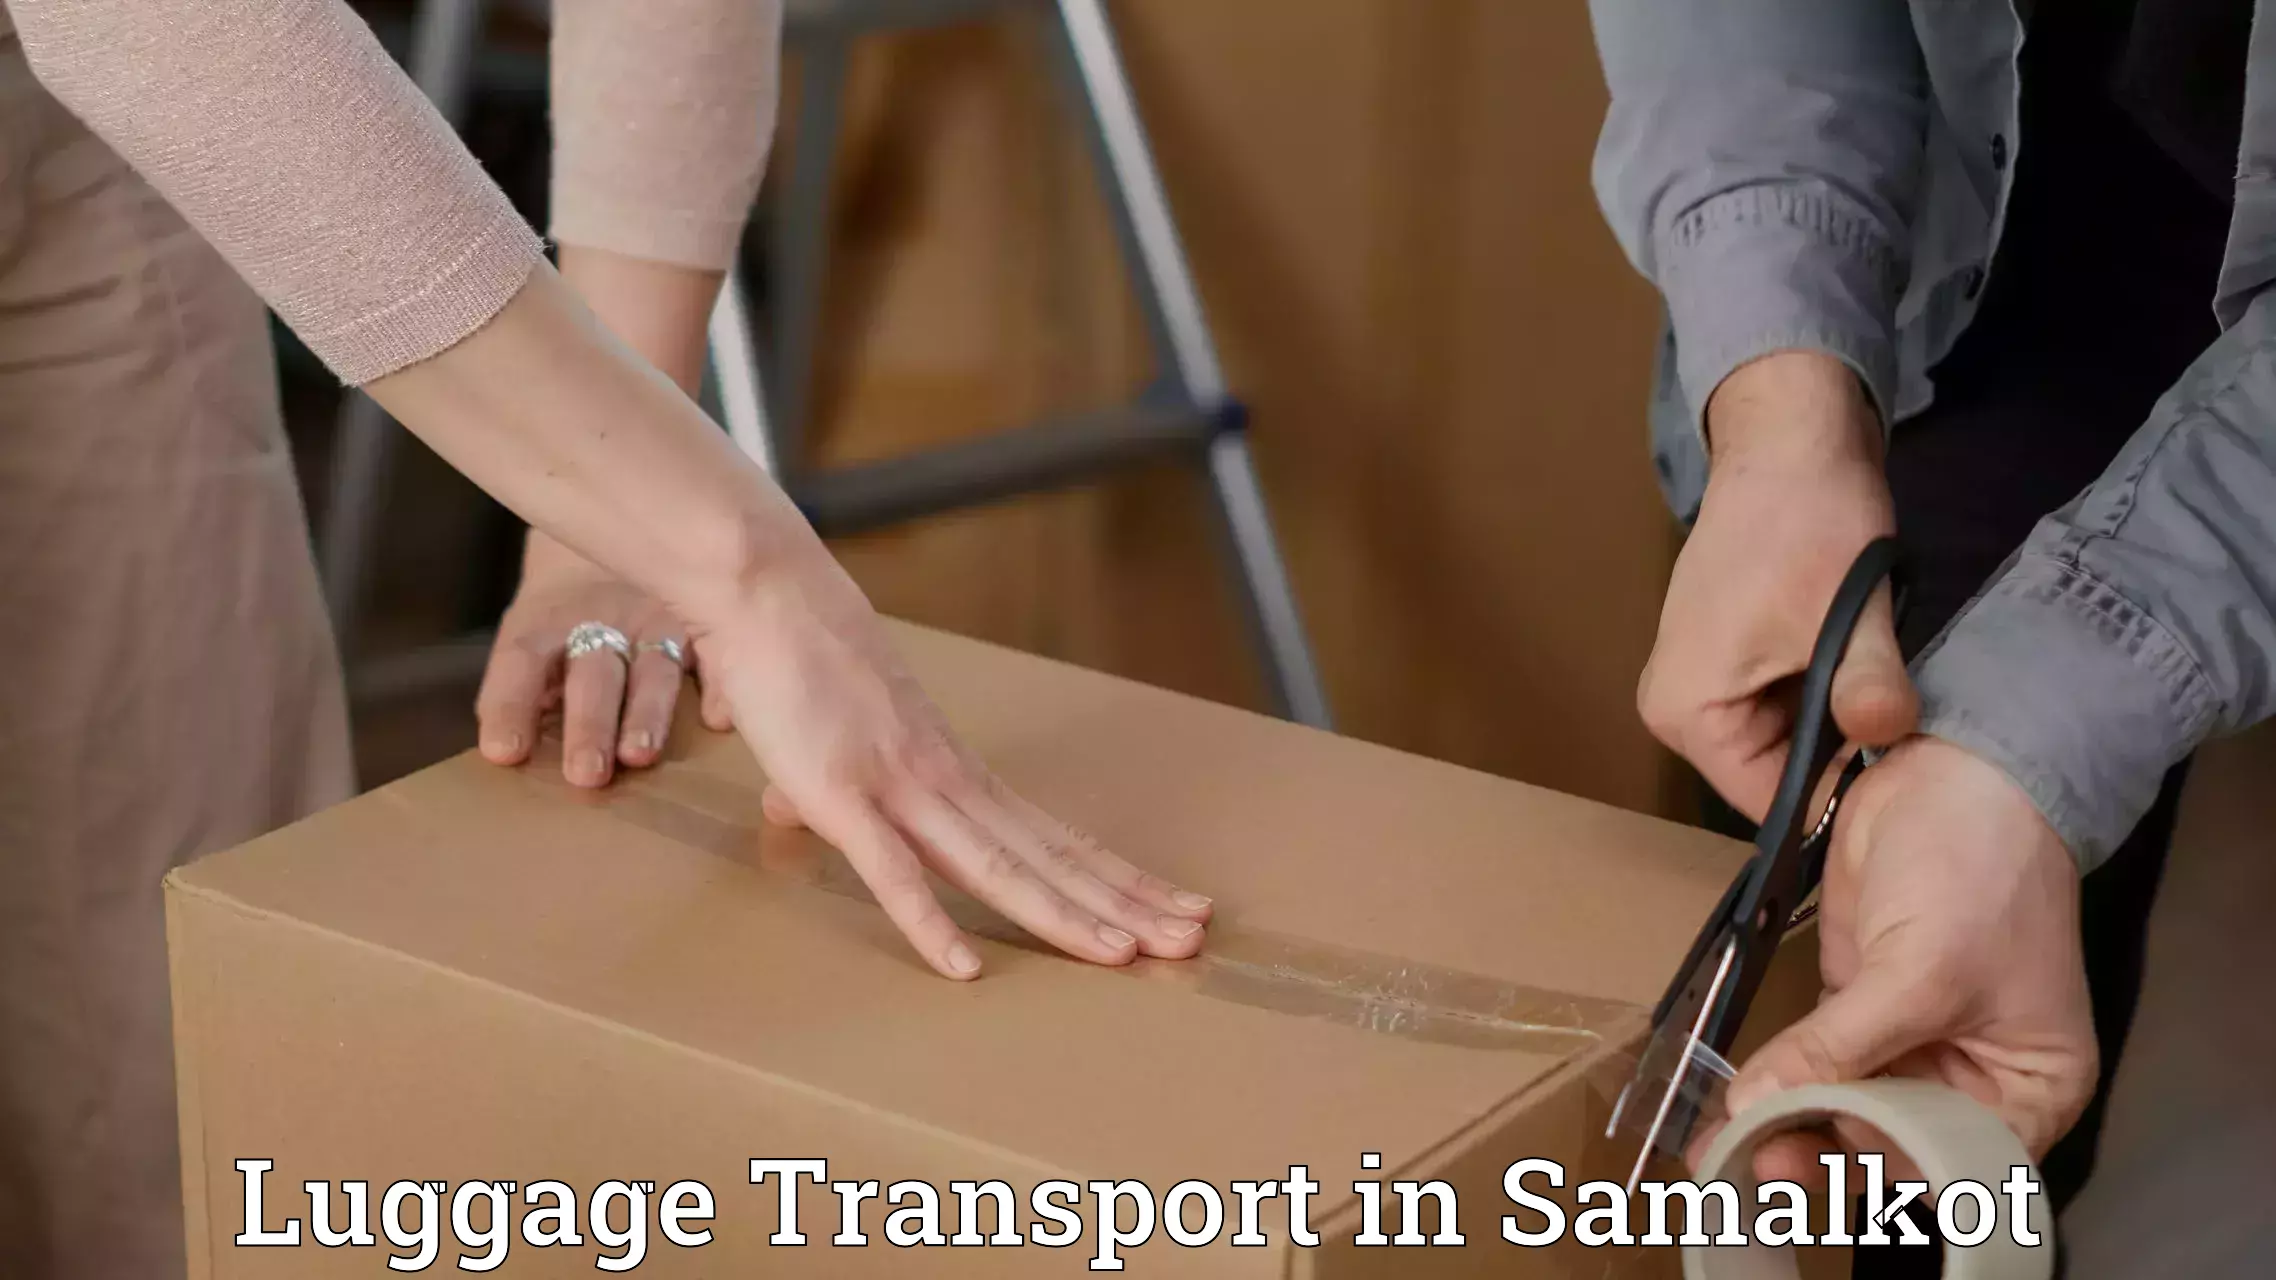 Baggage transport professionals in Samalkot